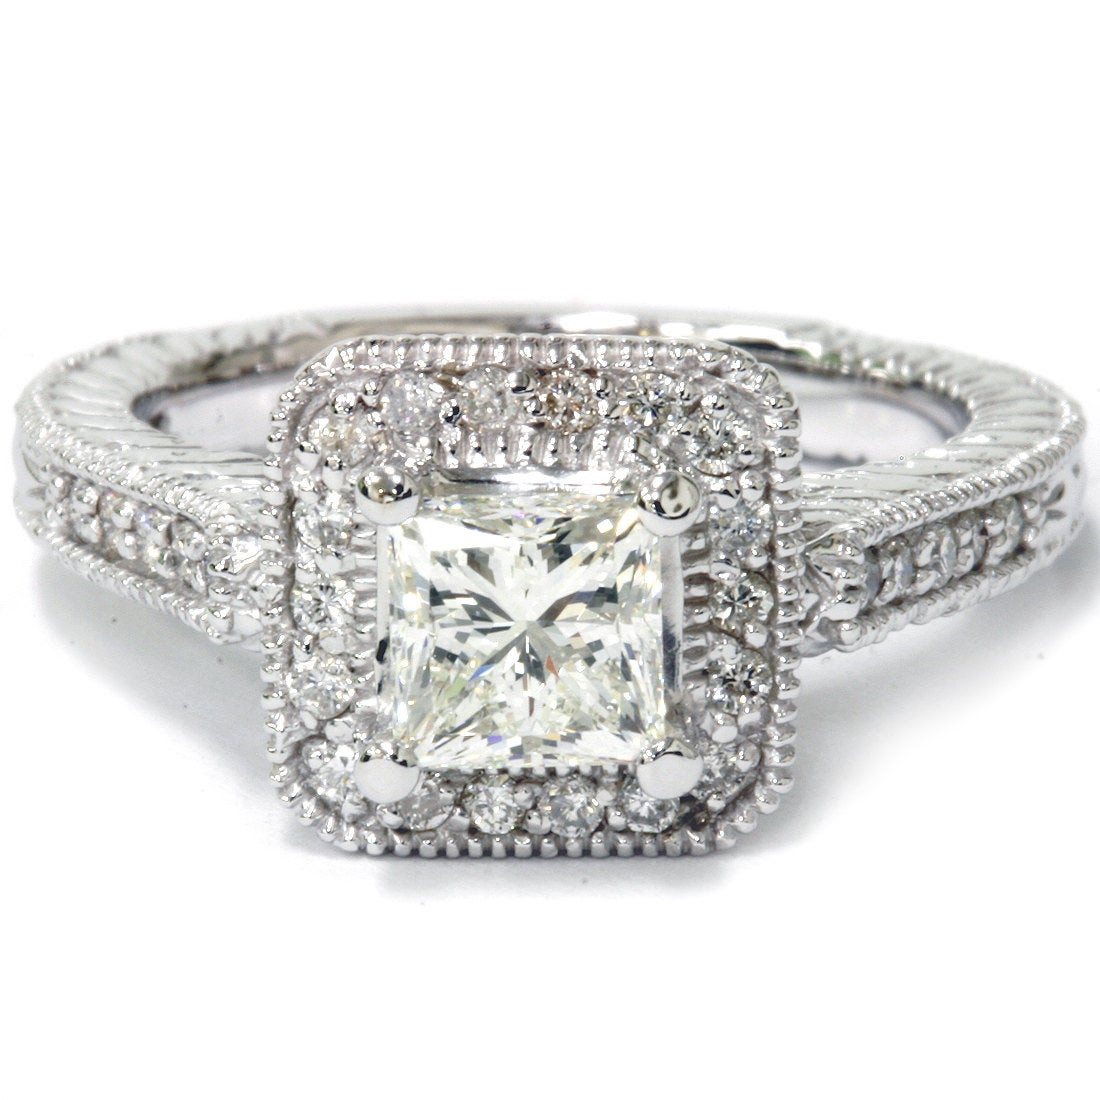 Princess Cut Vintage Engagement Ring
 1 55CT Princess Cut Diamond Engagement Ring Halo Vintage